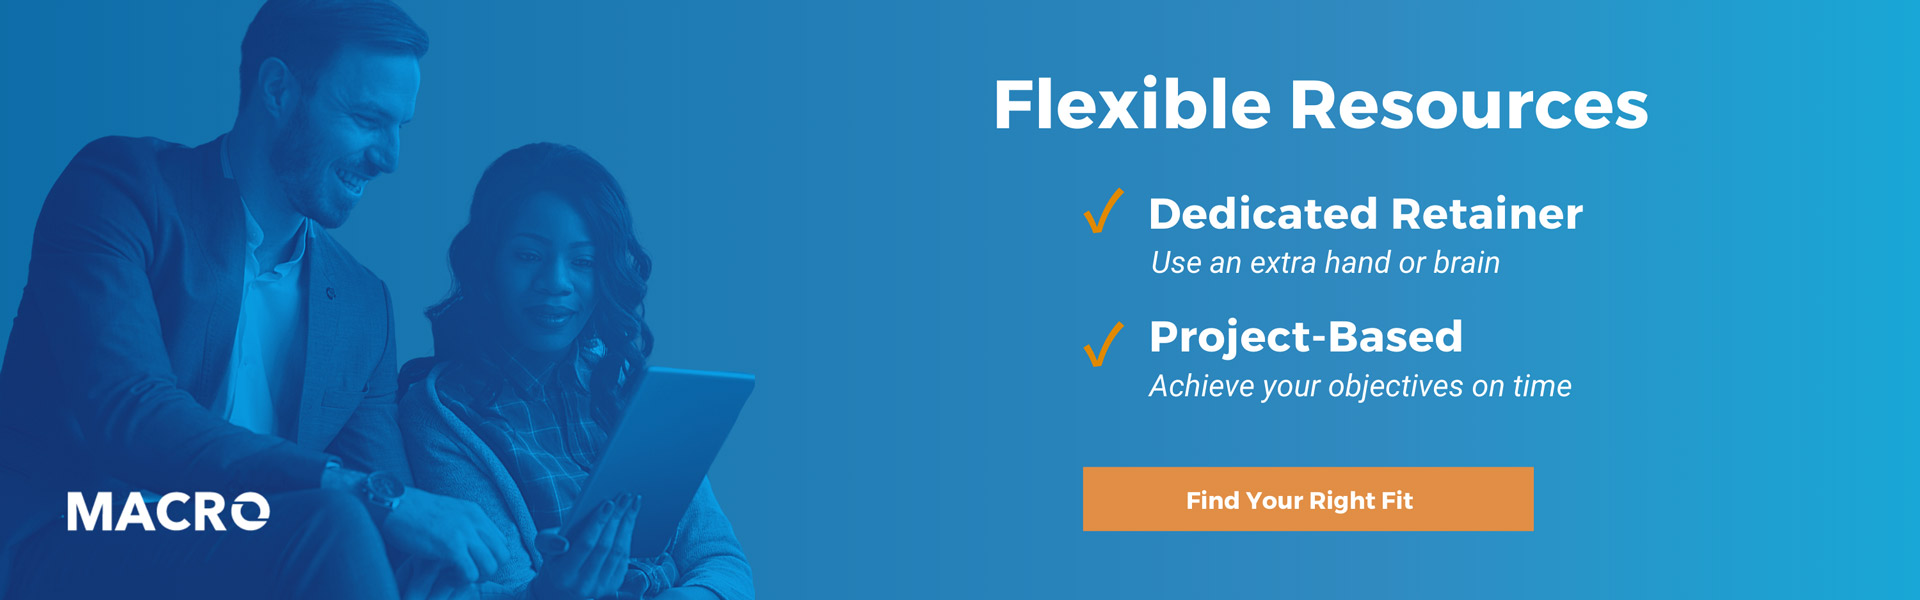 Flexible resources